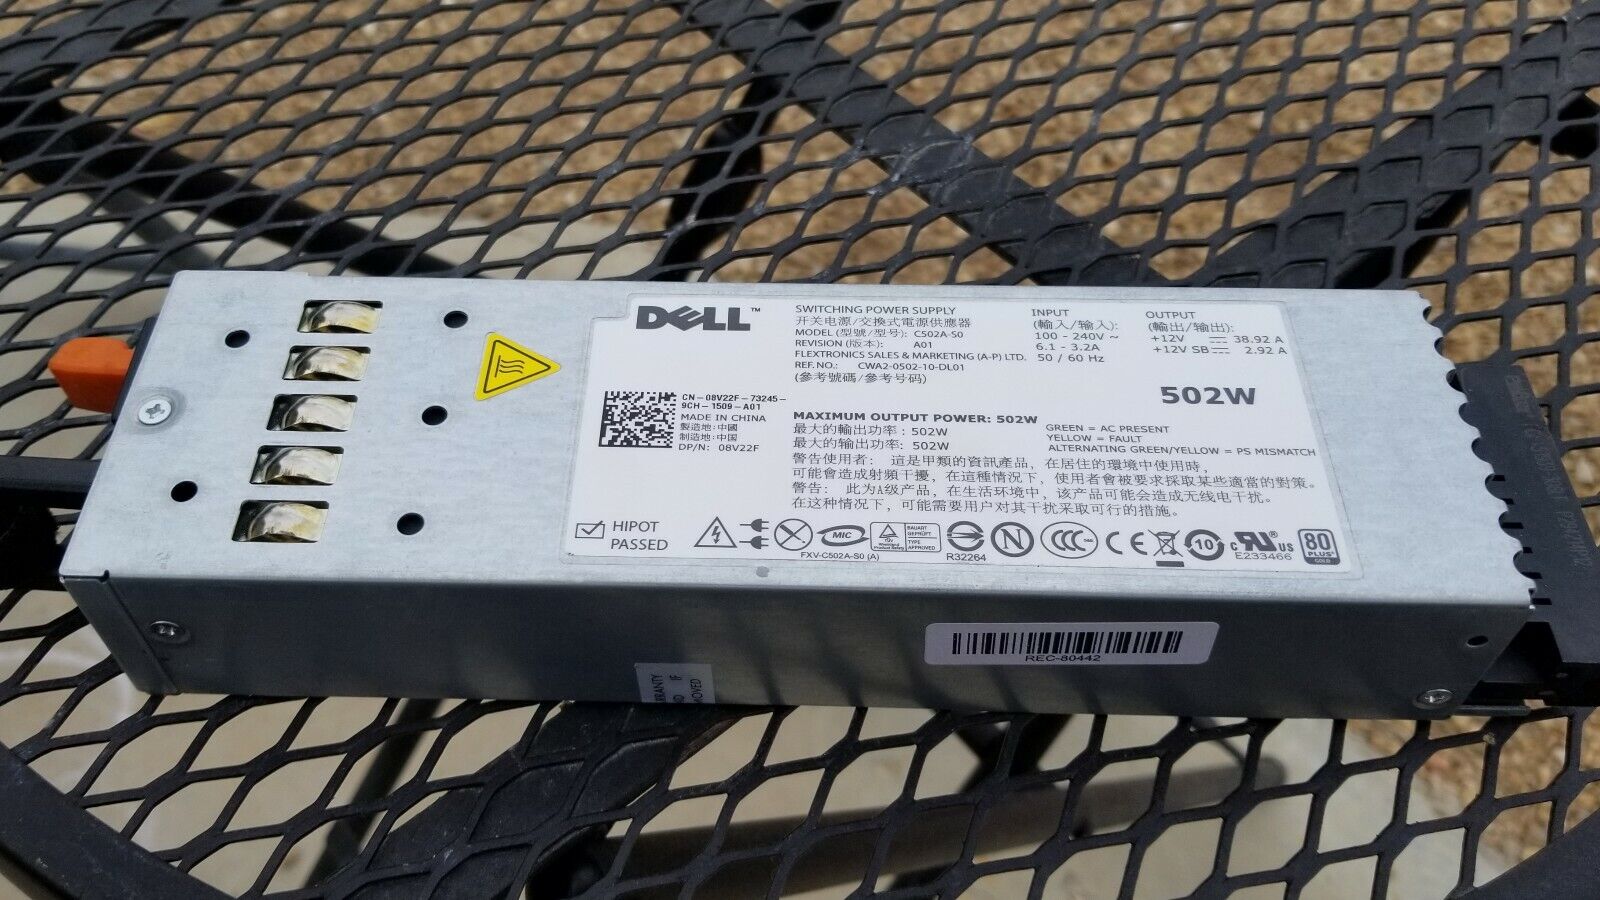 Dell PowerEdge R610 G1 G2 Server 502W Hot Swap Power Supply PSU C502A